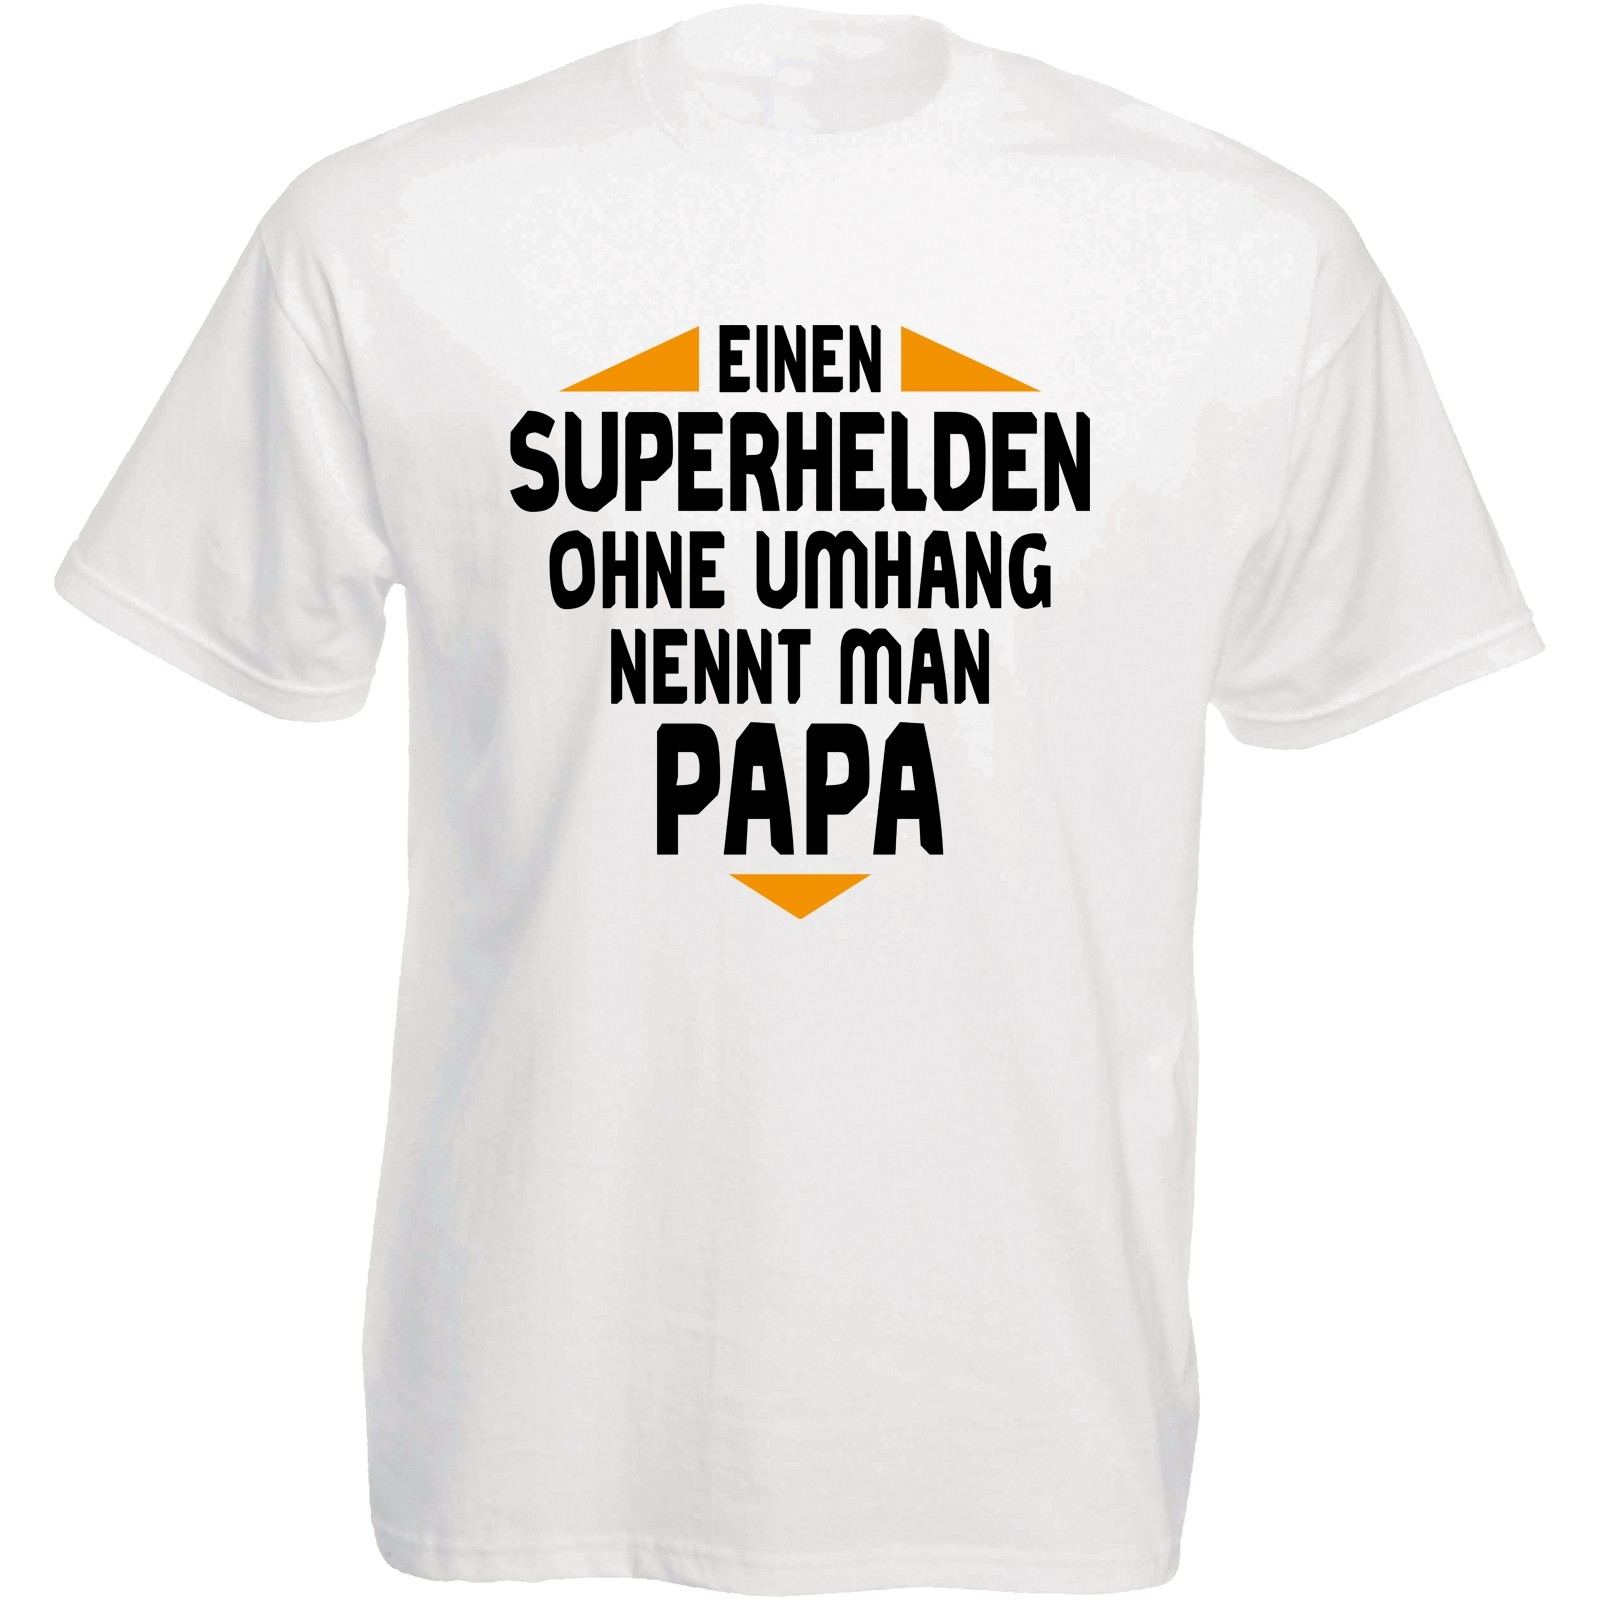 Funshirt weiß oder schwarz, als Tanktop oder Shirt - Einen Superhelden ohne Umhang nennt man Papa